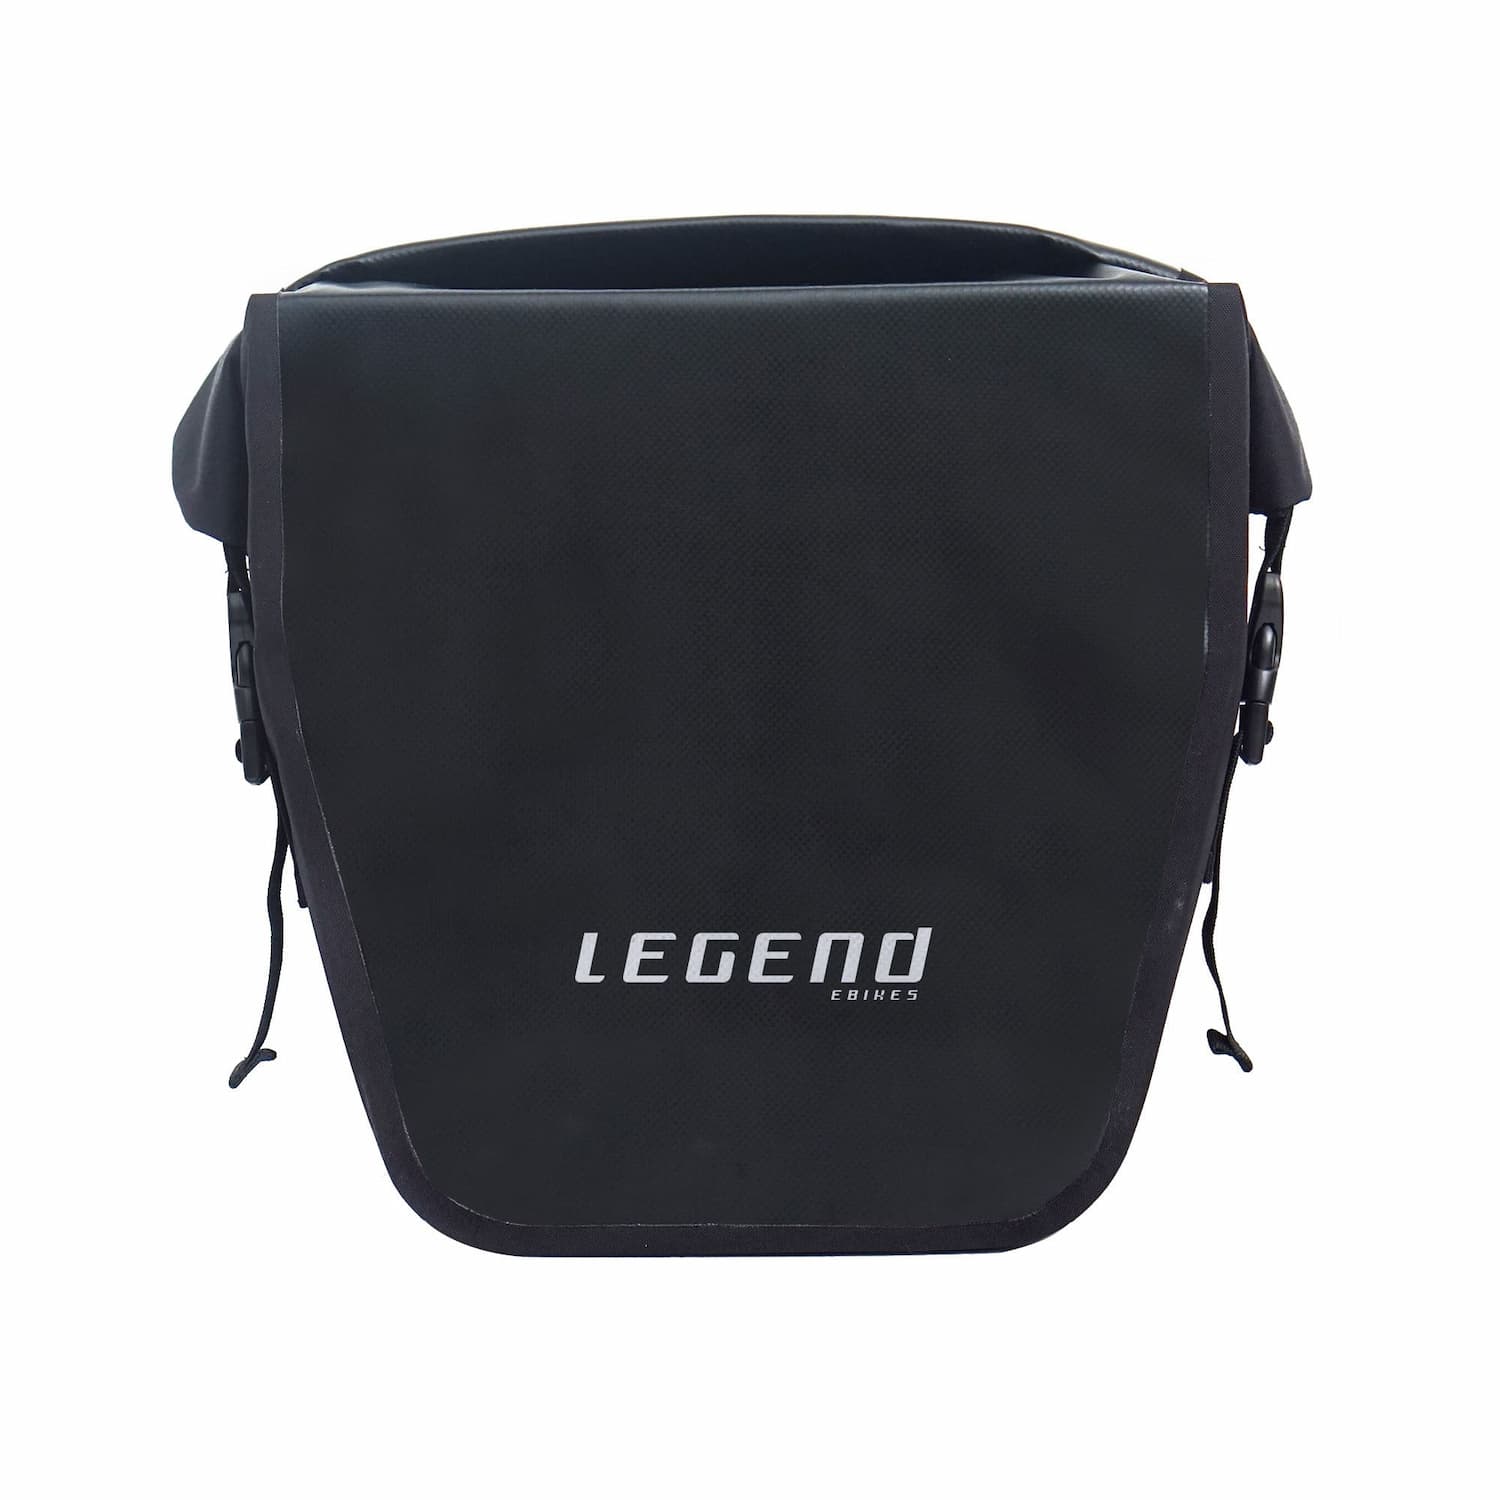 Legend waterproof large pannier bag 1 bag black